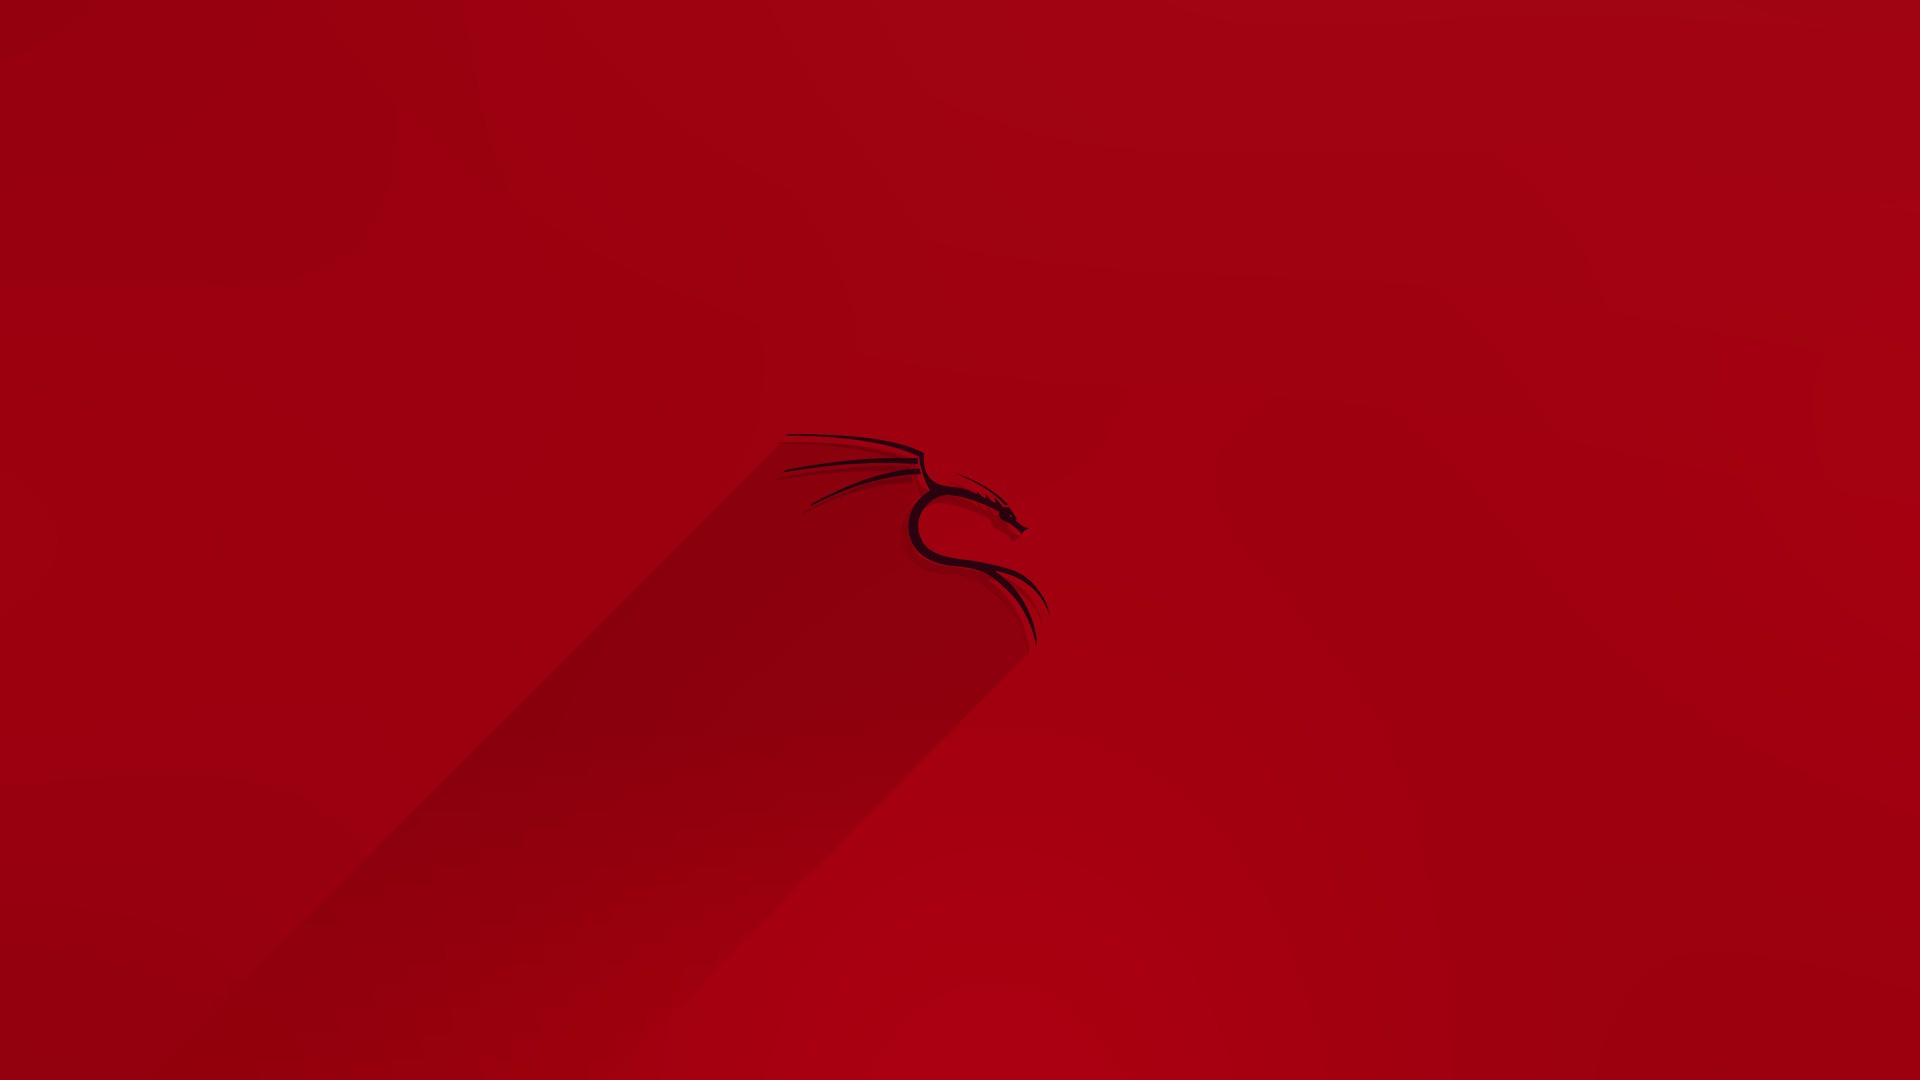 Kali, Kali Linux, Red, Linux Wallpaper